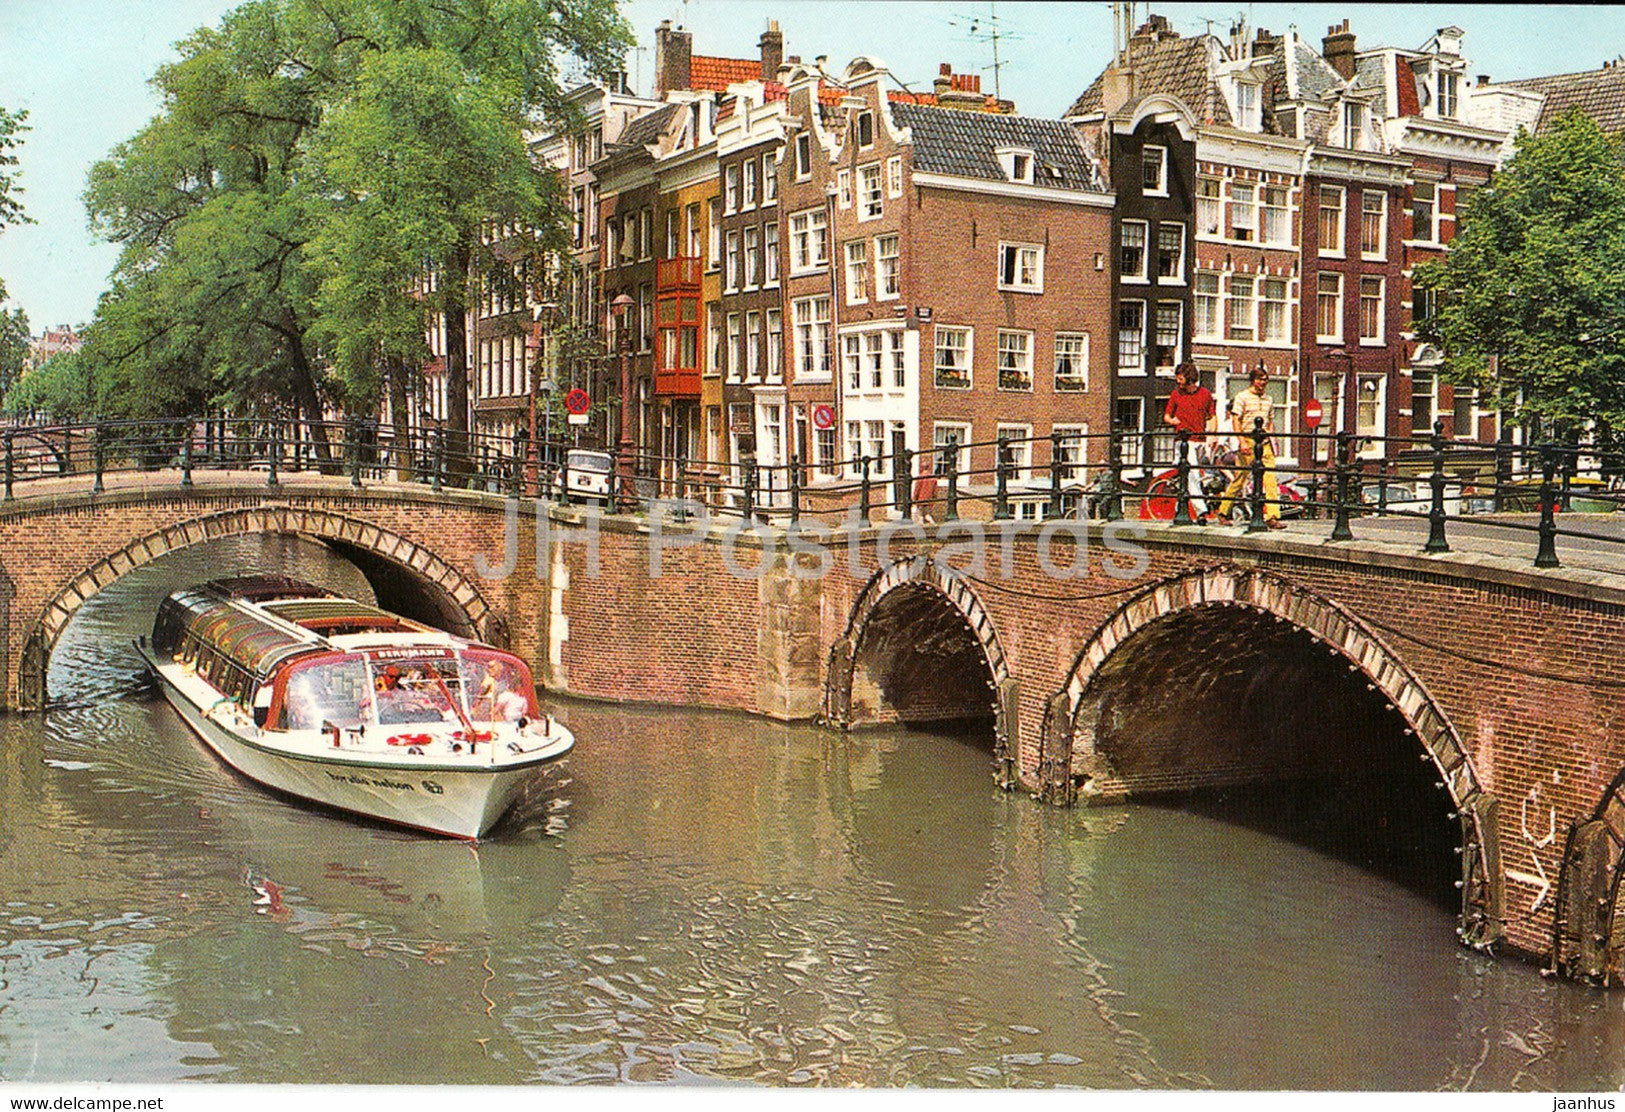 Amsterdam - The Keizersgracht Reguliersgracht at the seven bridges - boat - Netherlands - unused - JH Postcards